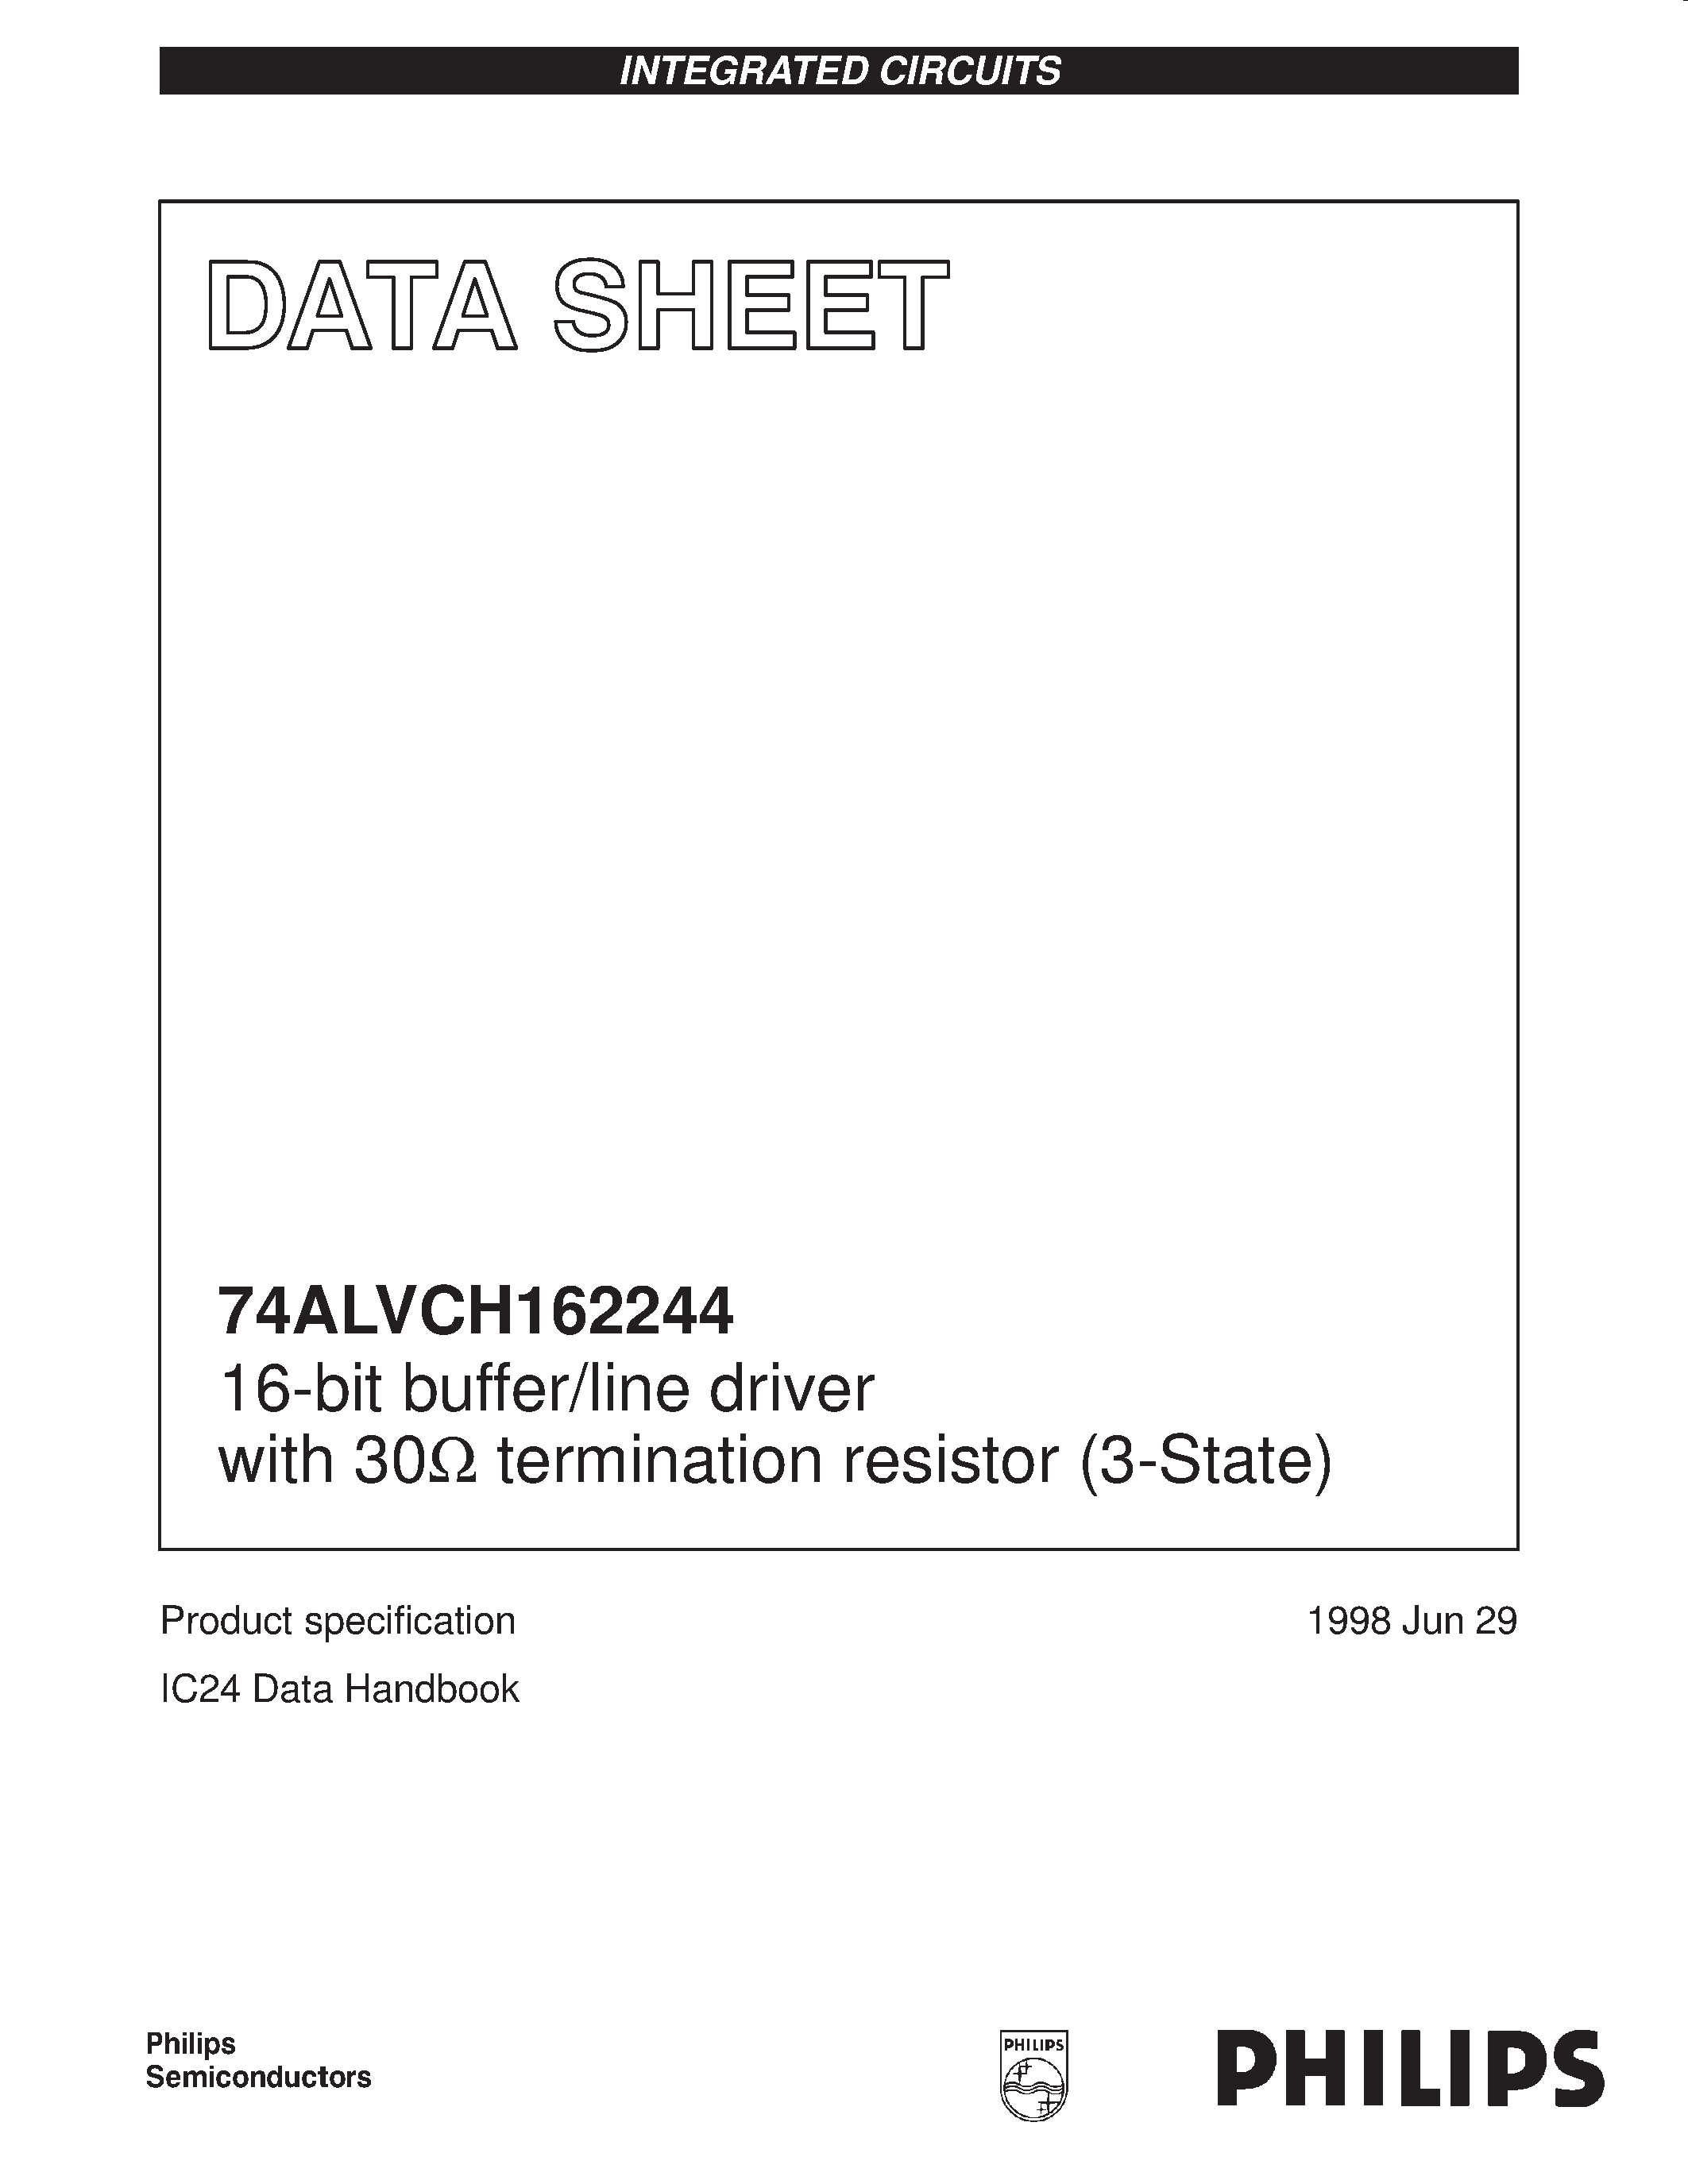 Даташит 74ALVCH162244DGG - 16-bit buffer/line driver with 30ohm termination resistor 3-State страница 1